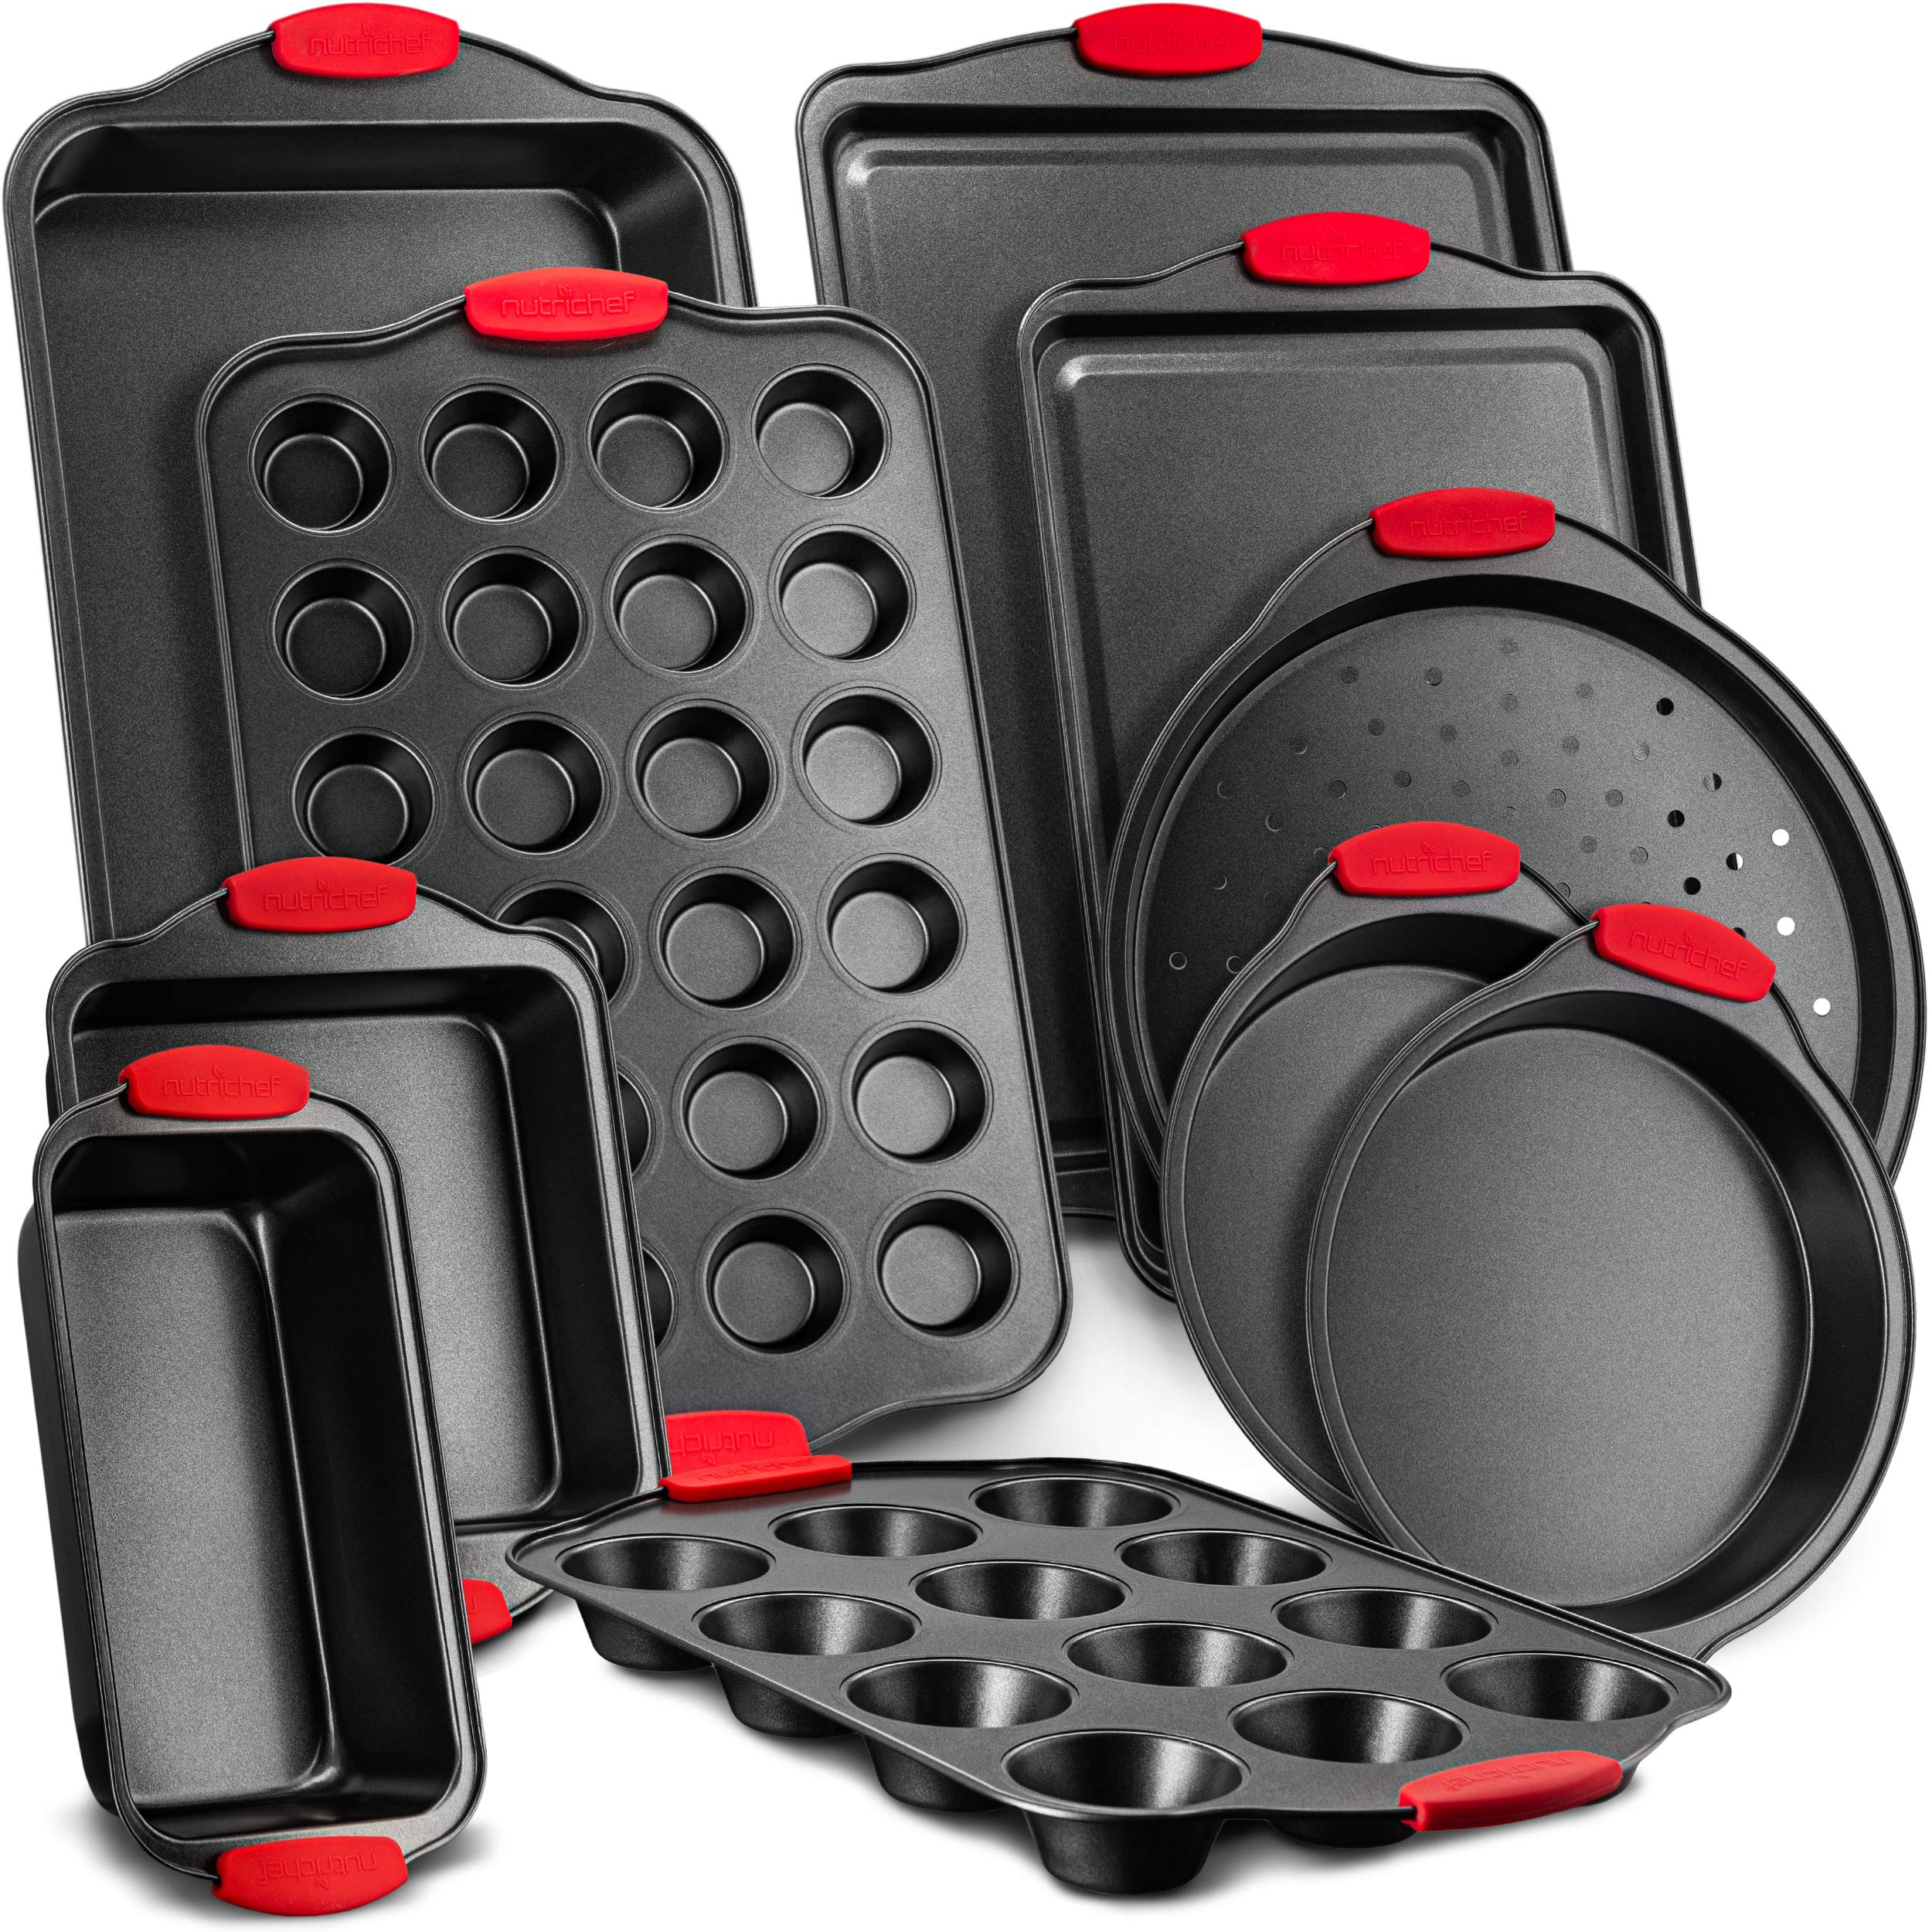 10-Piece NutriChef Baking Pan Set w/ Heatproof Silicone Handles $41 + Free Shipping